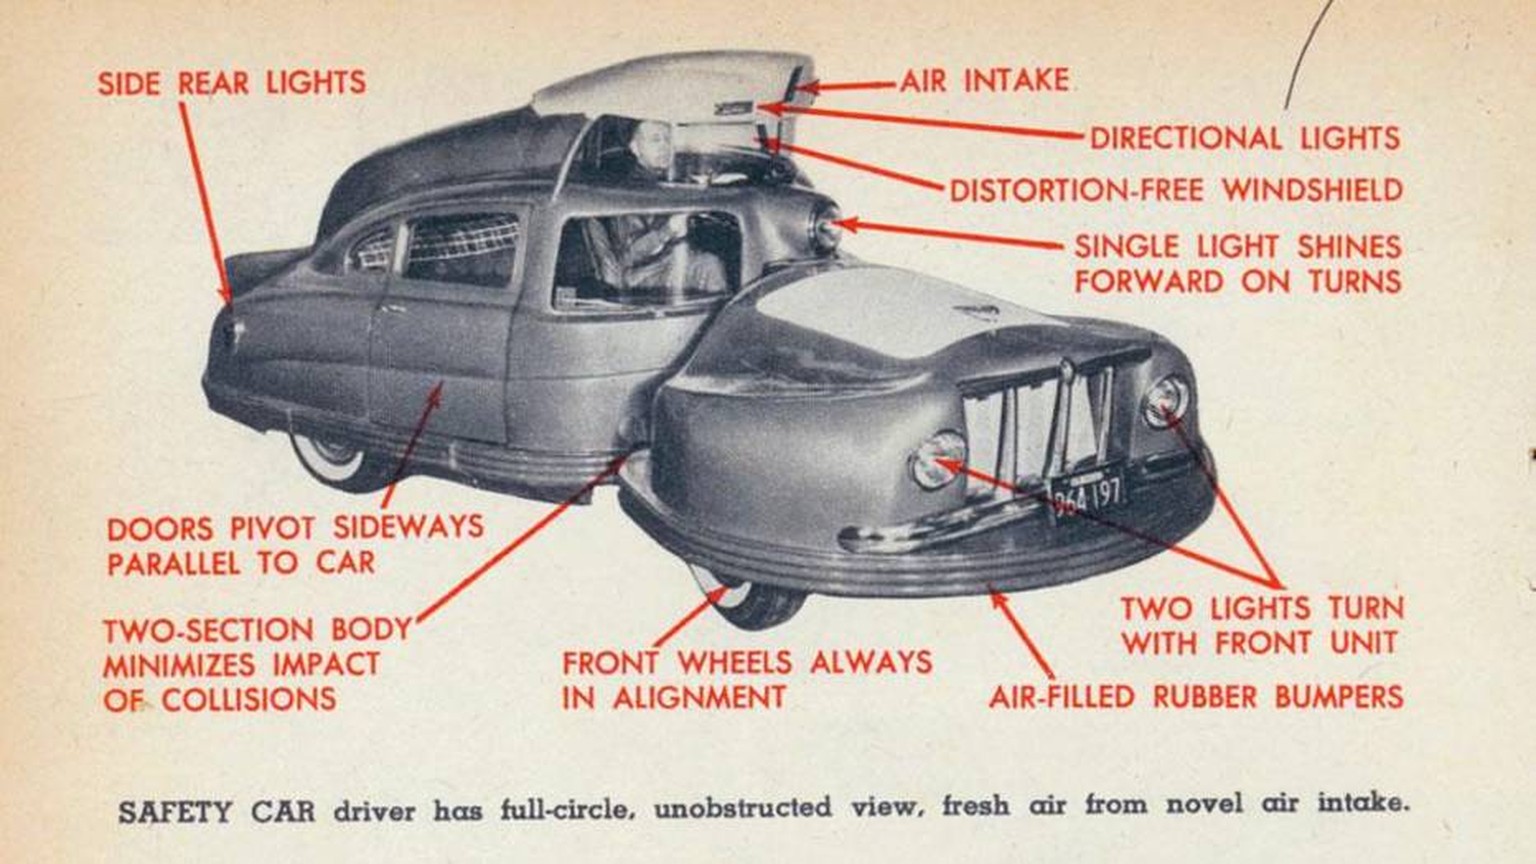 The Sir Vival car in 1958. http://autoweek.com/article/car-life/meet-sir-vival-safety-car-future-wasnt